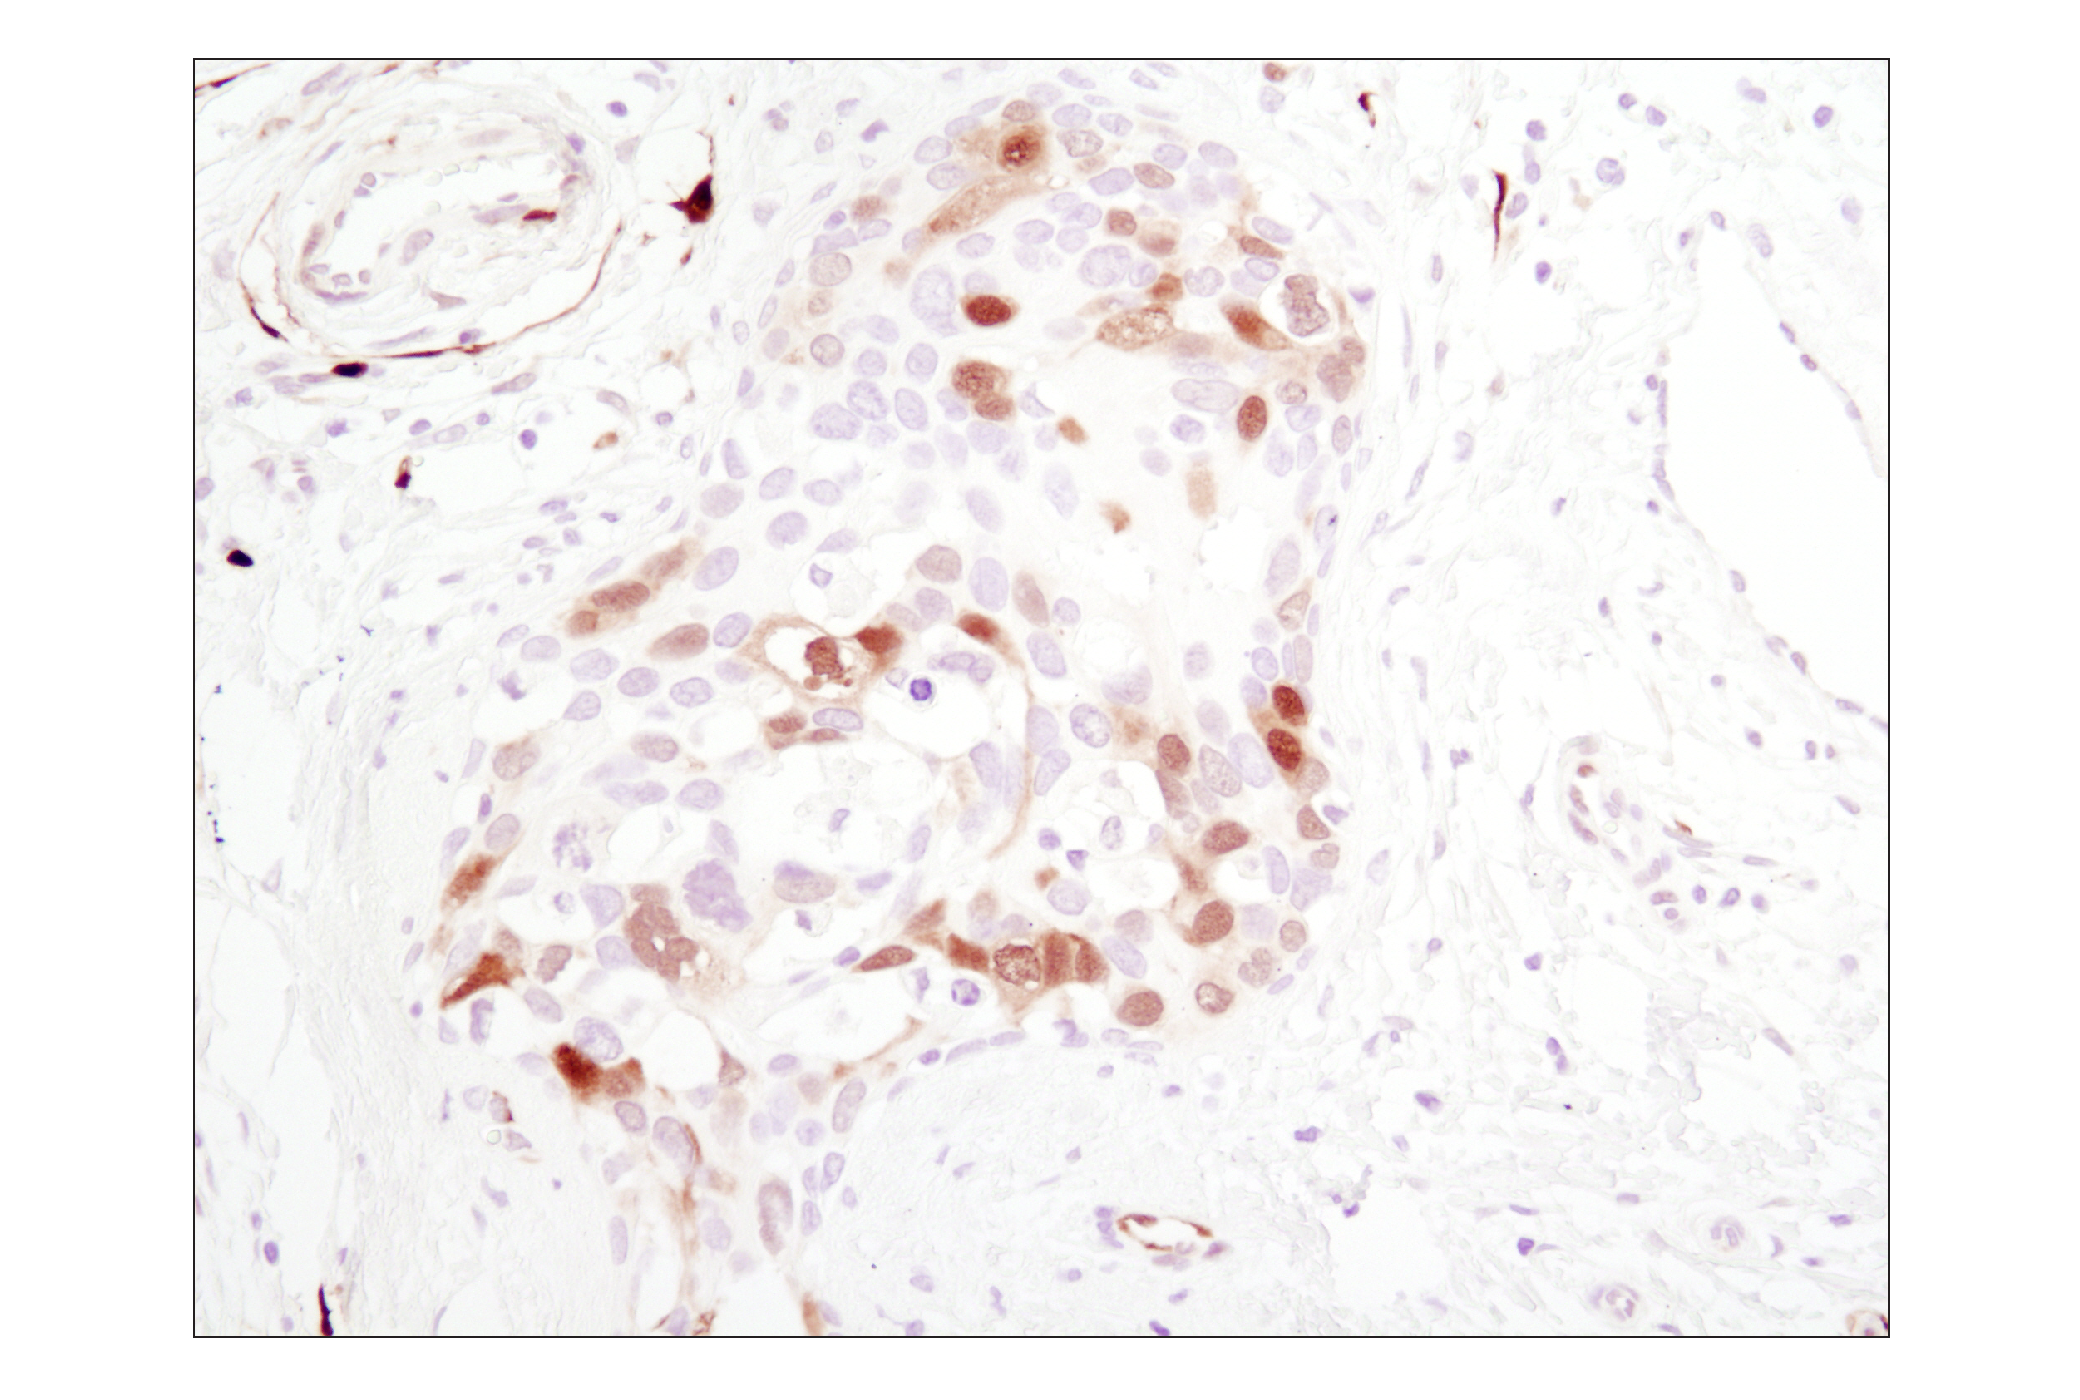  Image 7: PhosphoPlus® p44/42 MAPK (Erk1/2) (Thr202/Tyr204) Antibody Duet